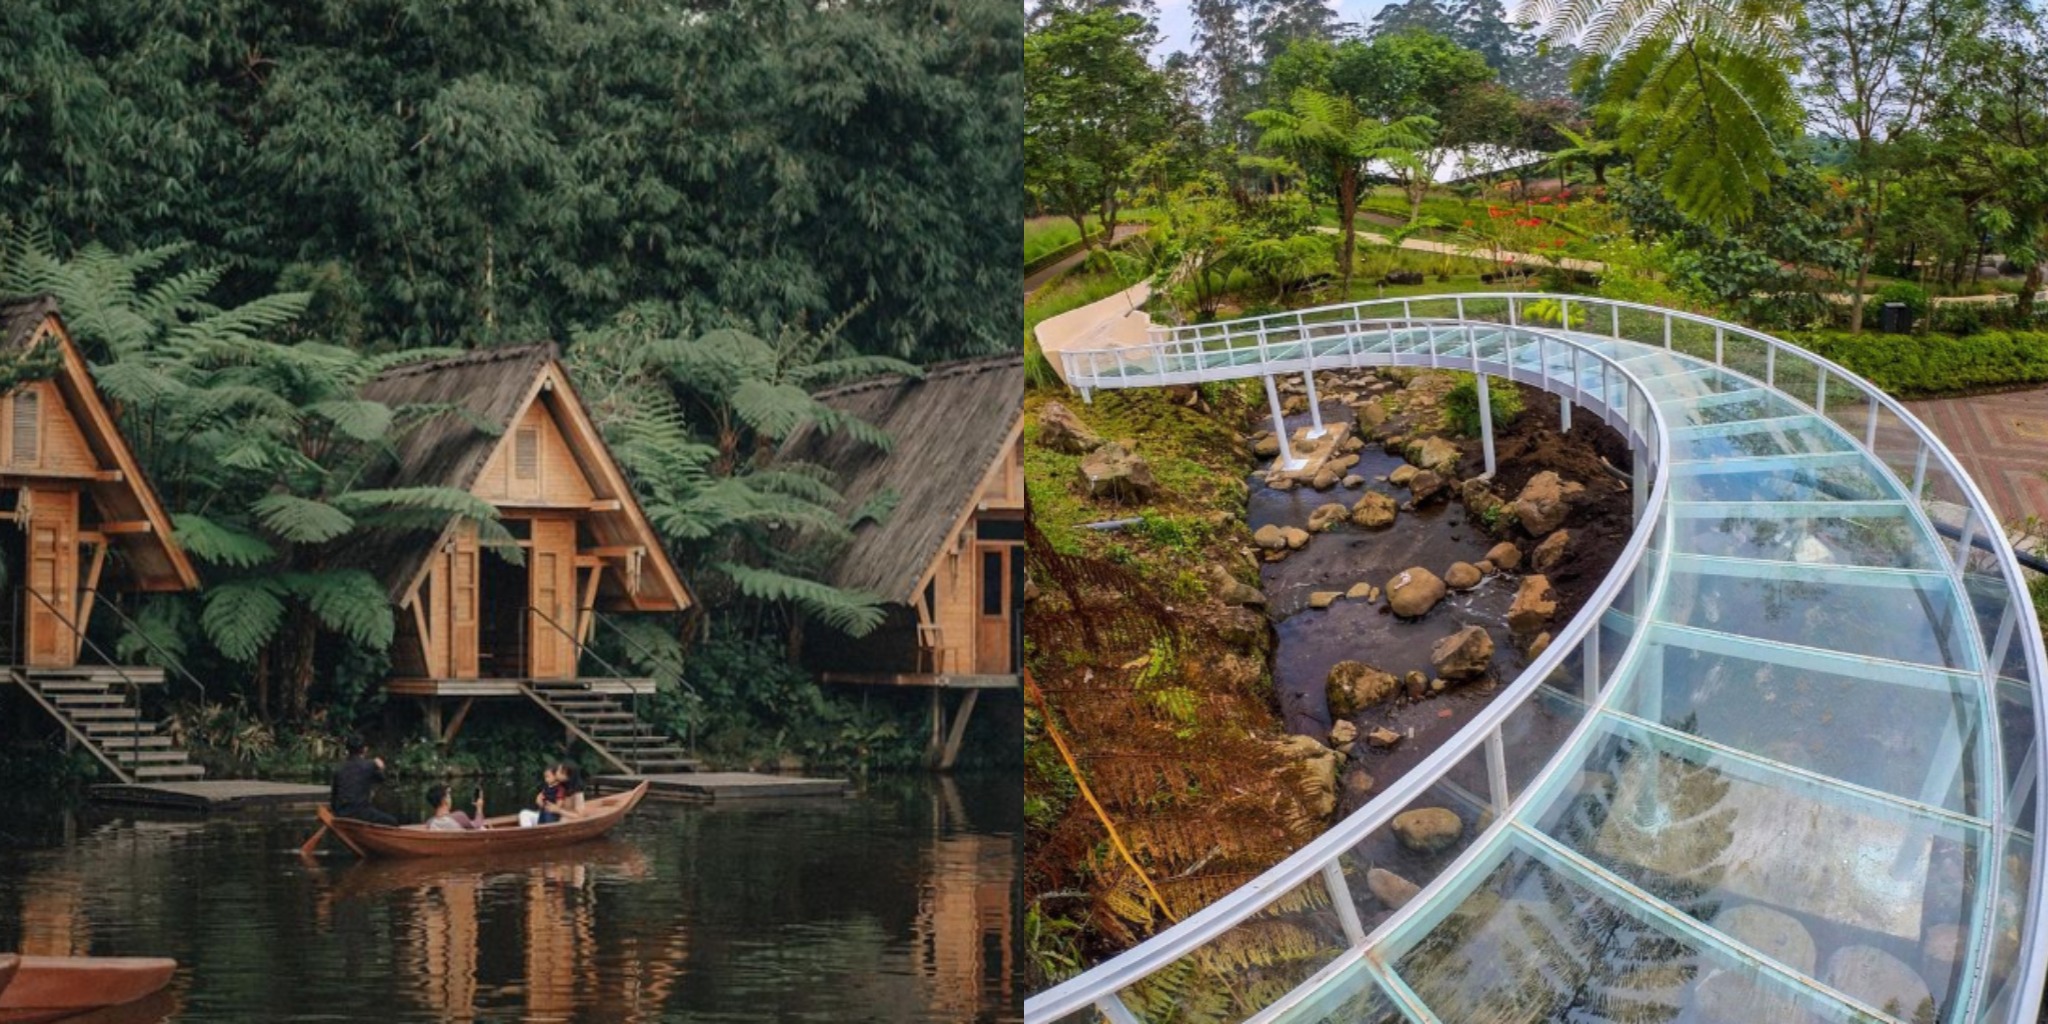 Harga Tiket Wisata Dusun Bambu Bandung, Ada Water Coaster Terbaru